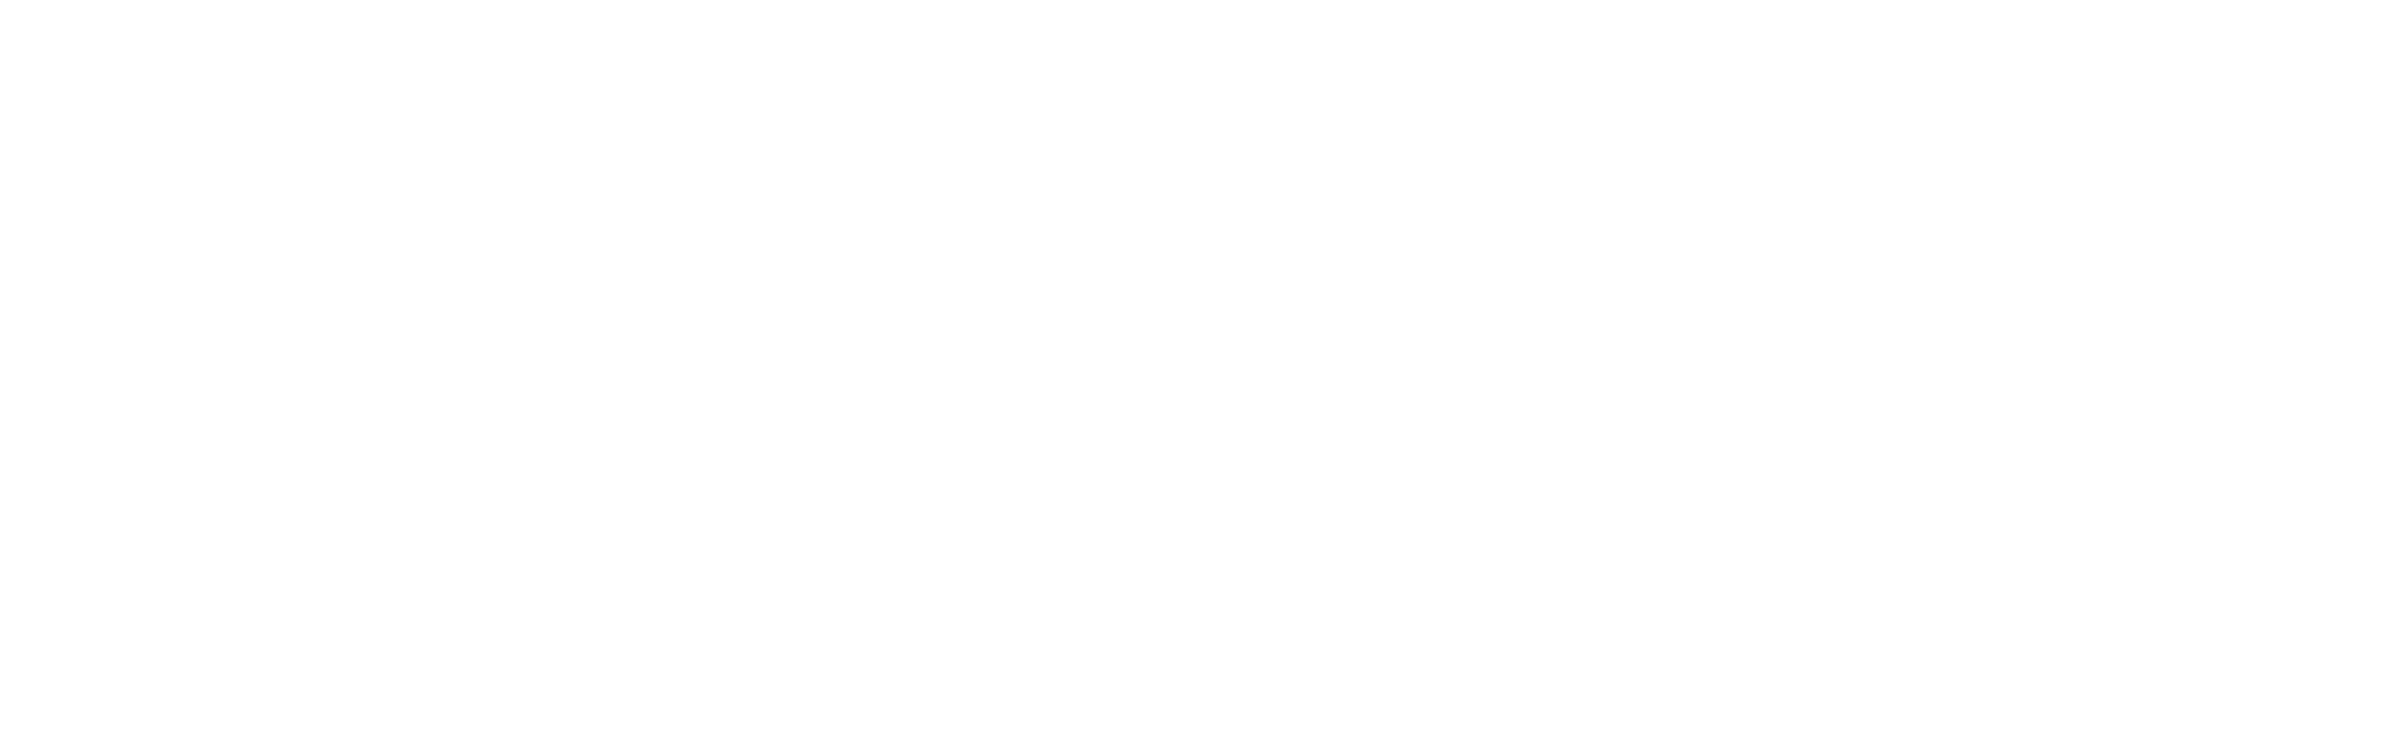 F.ILKK